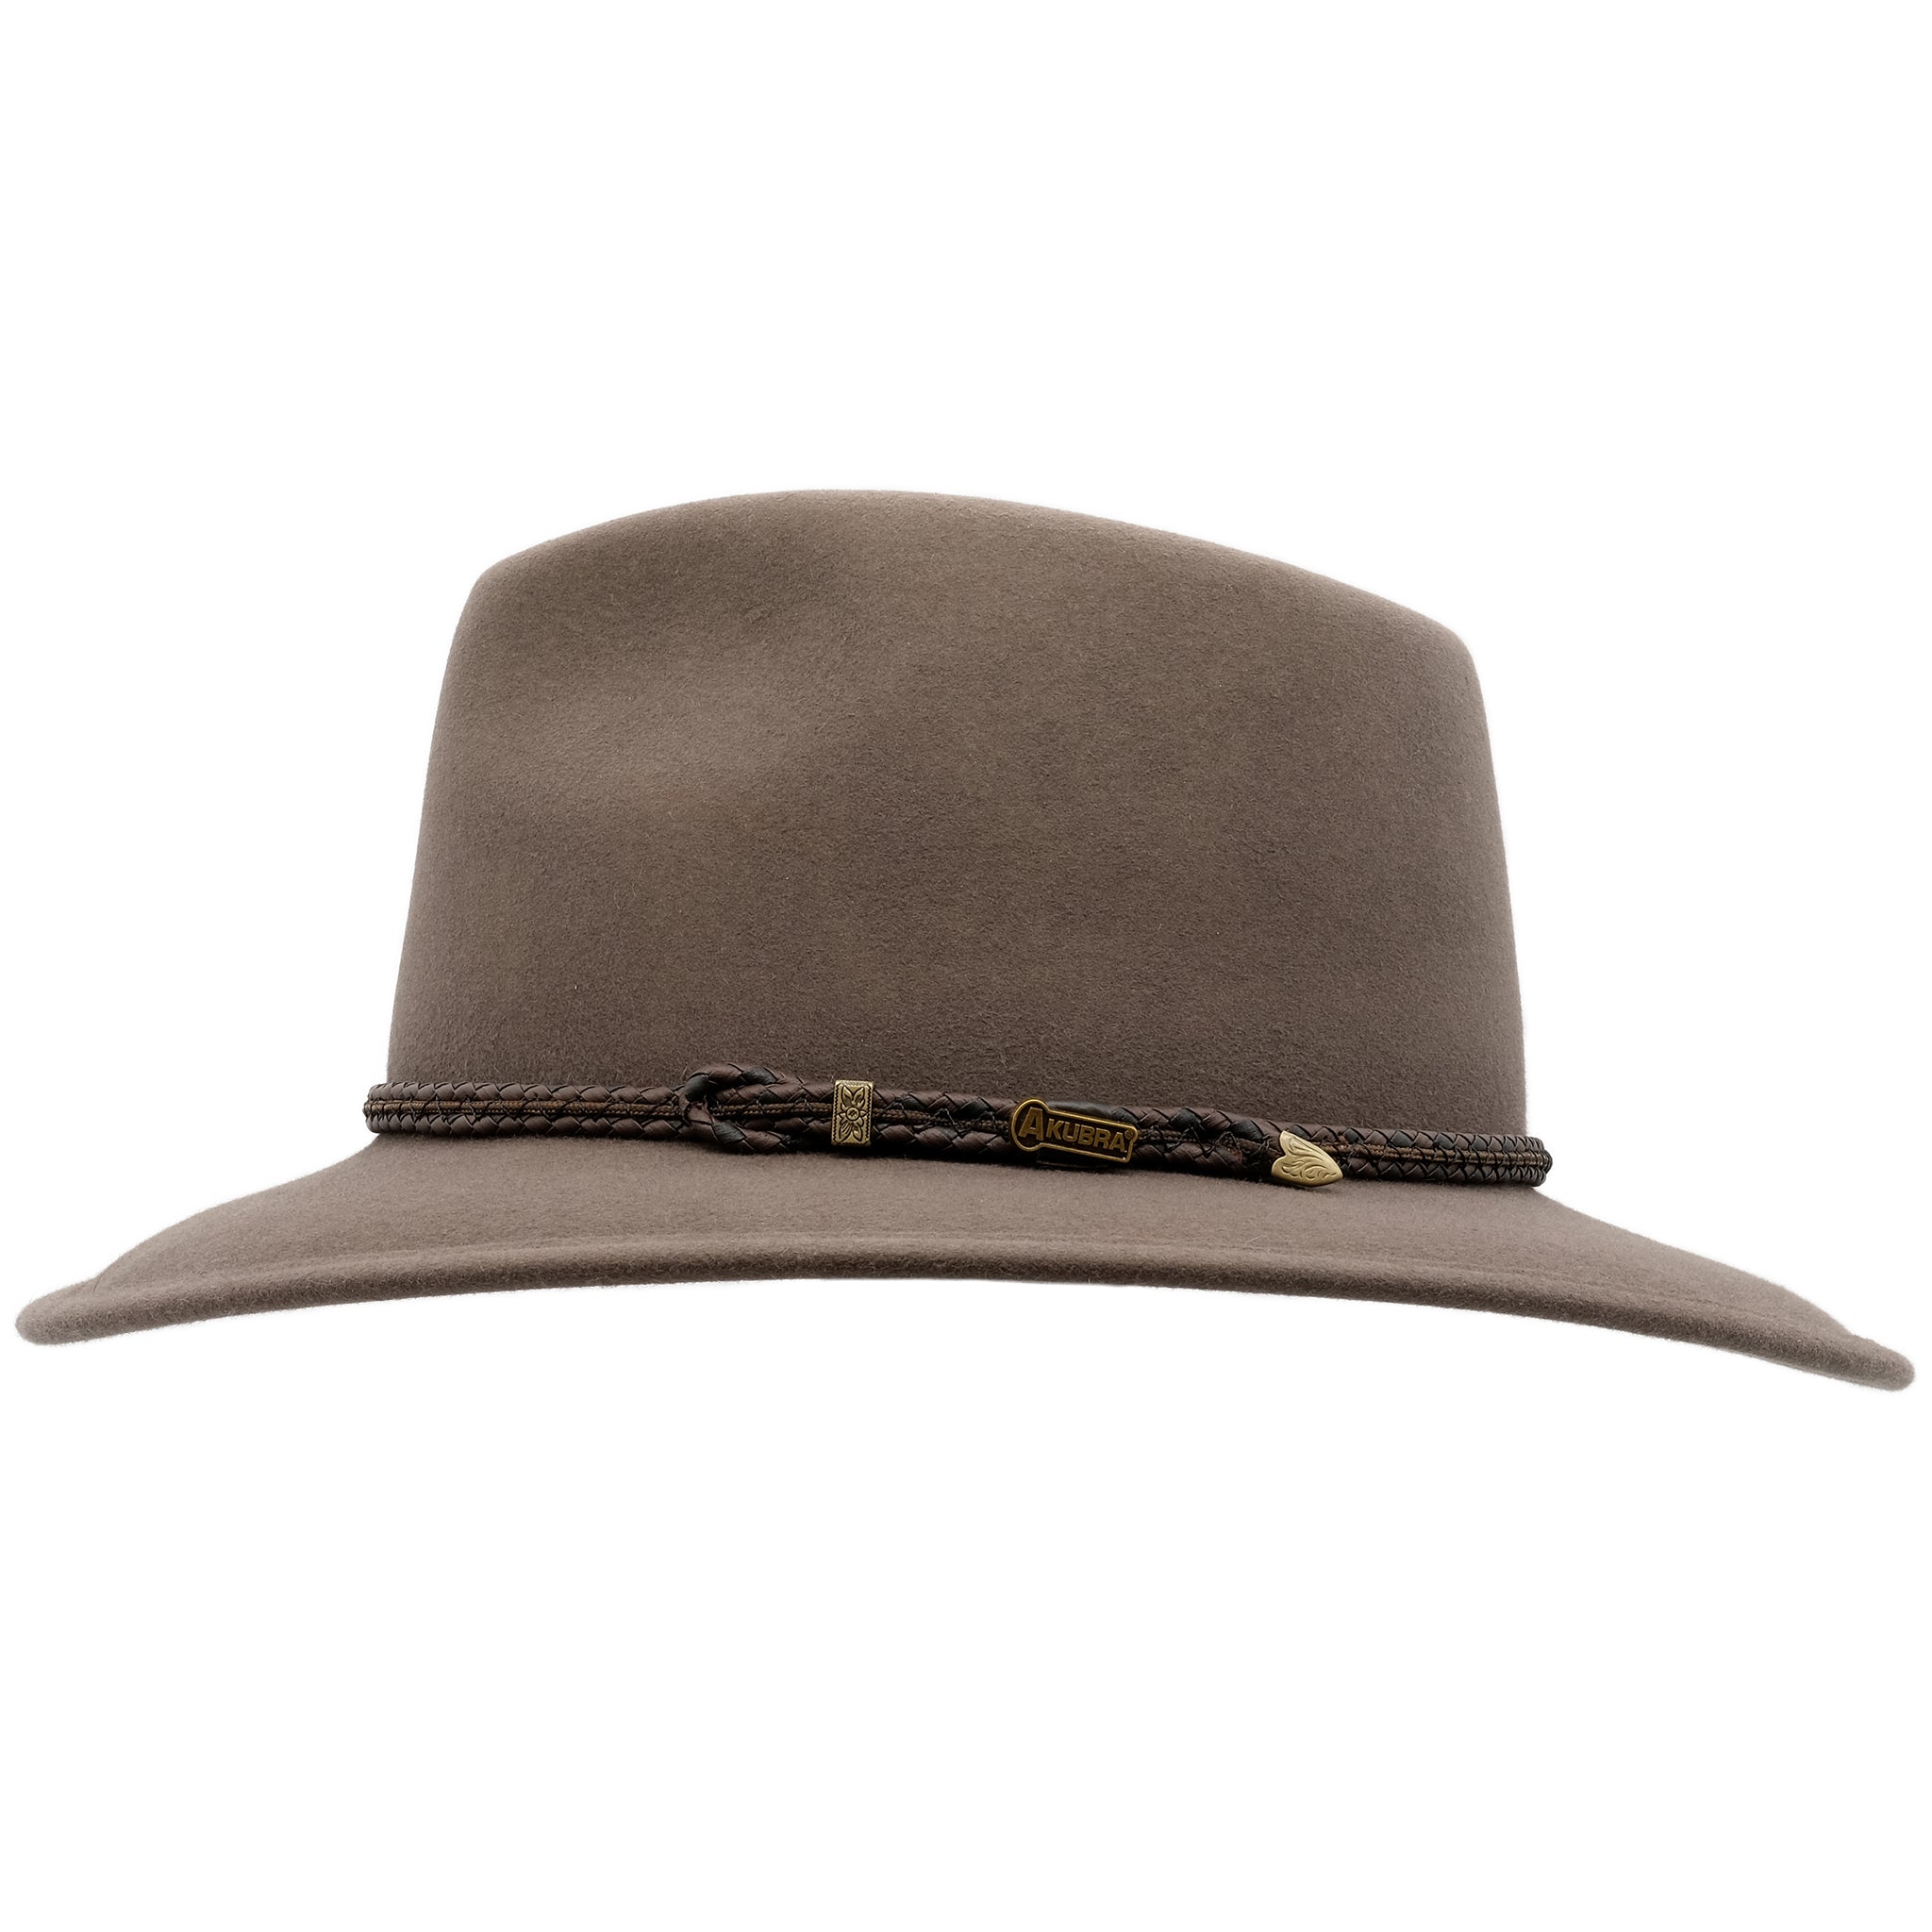 side view of the Akubra Traveller style hat in Regency fawn